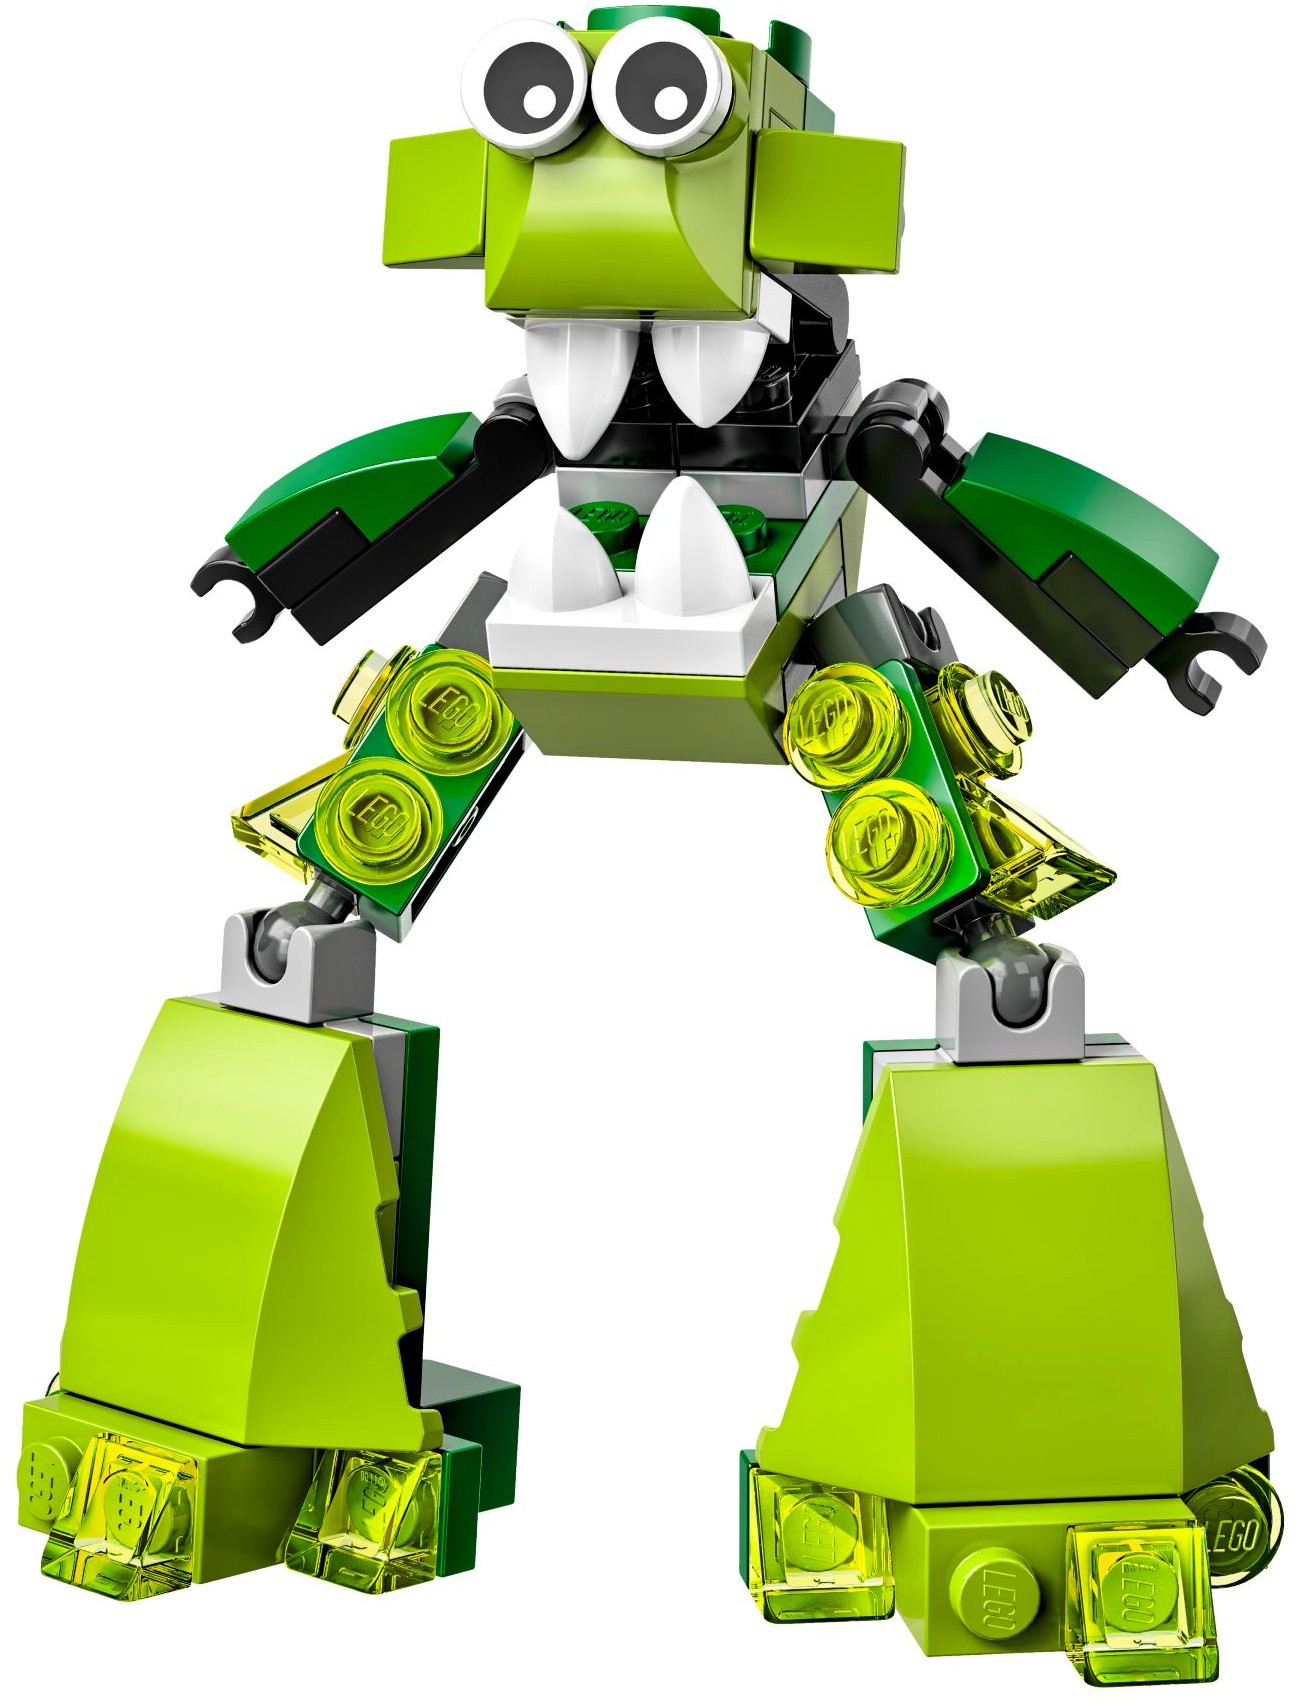 Lego Mixels Gurggle 6+ ani